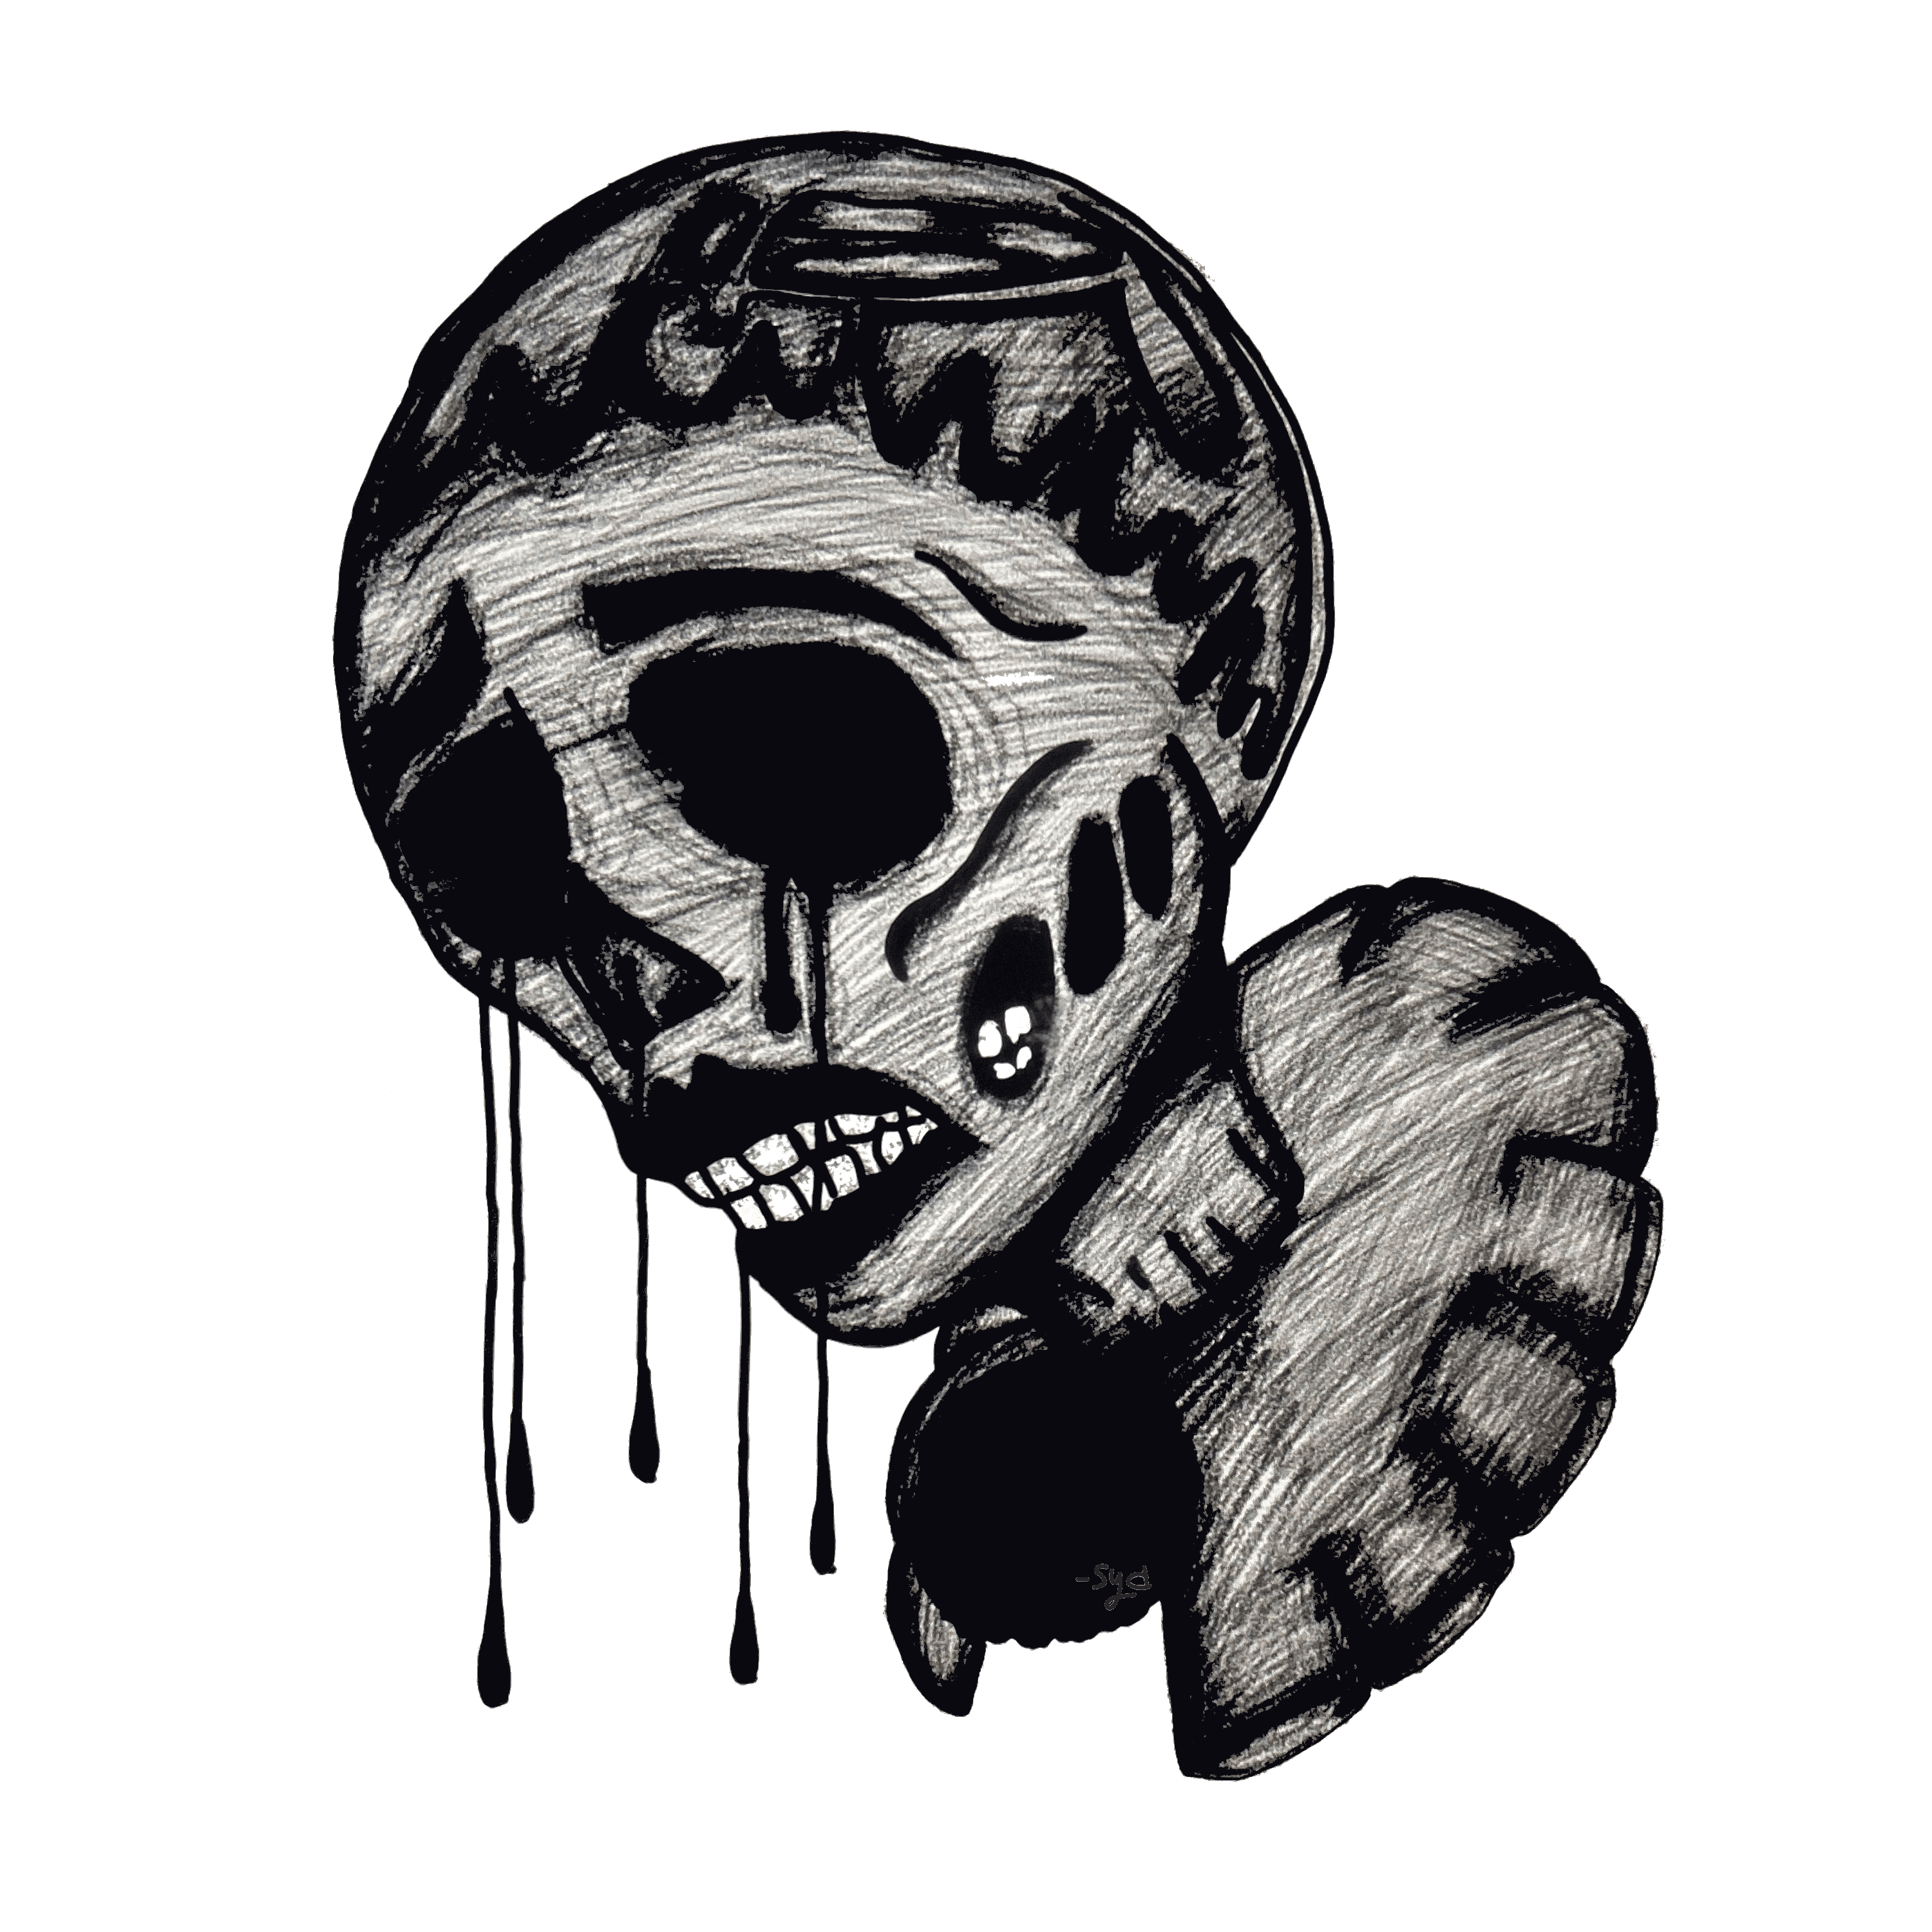 Sadness of a Skull